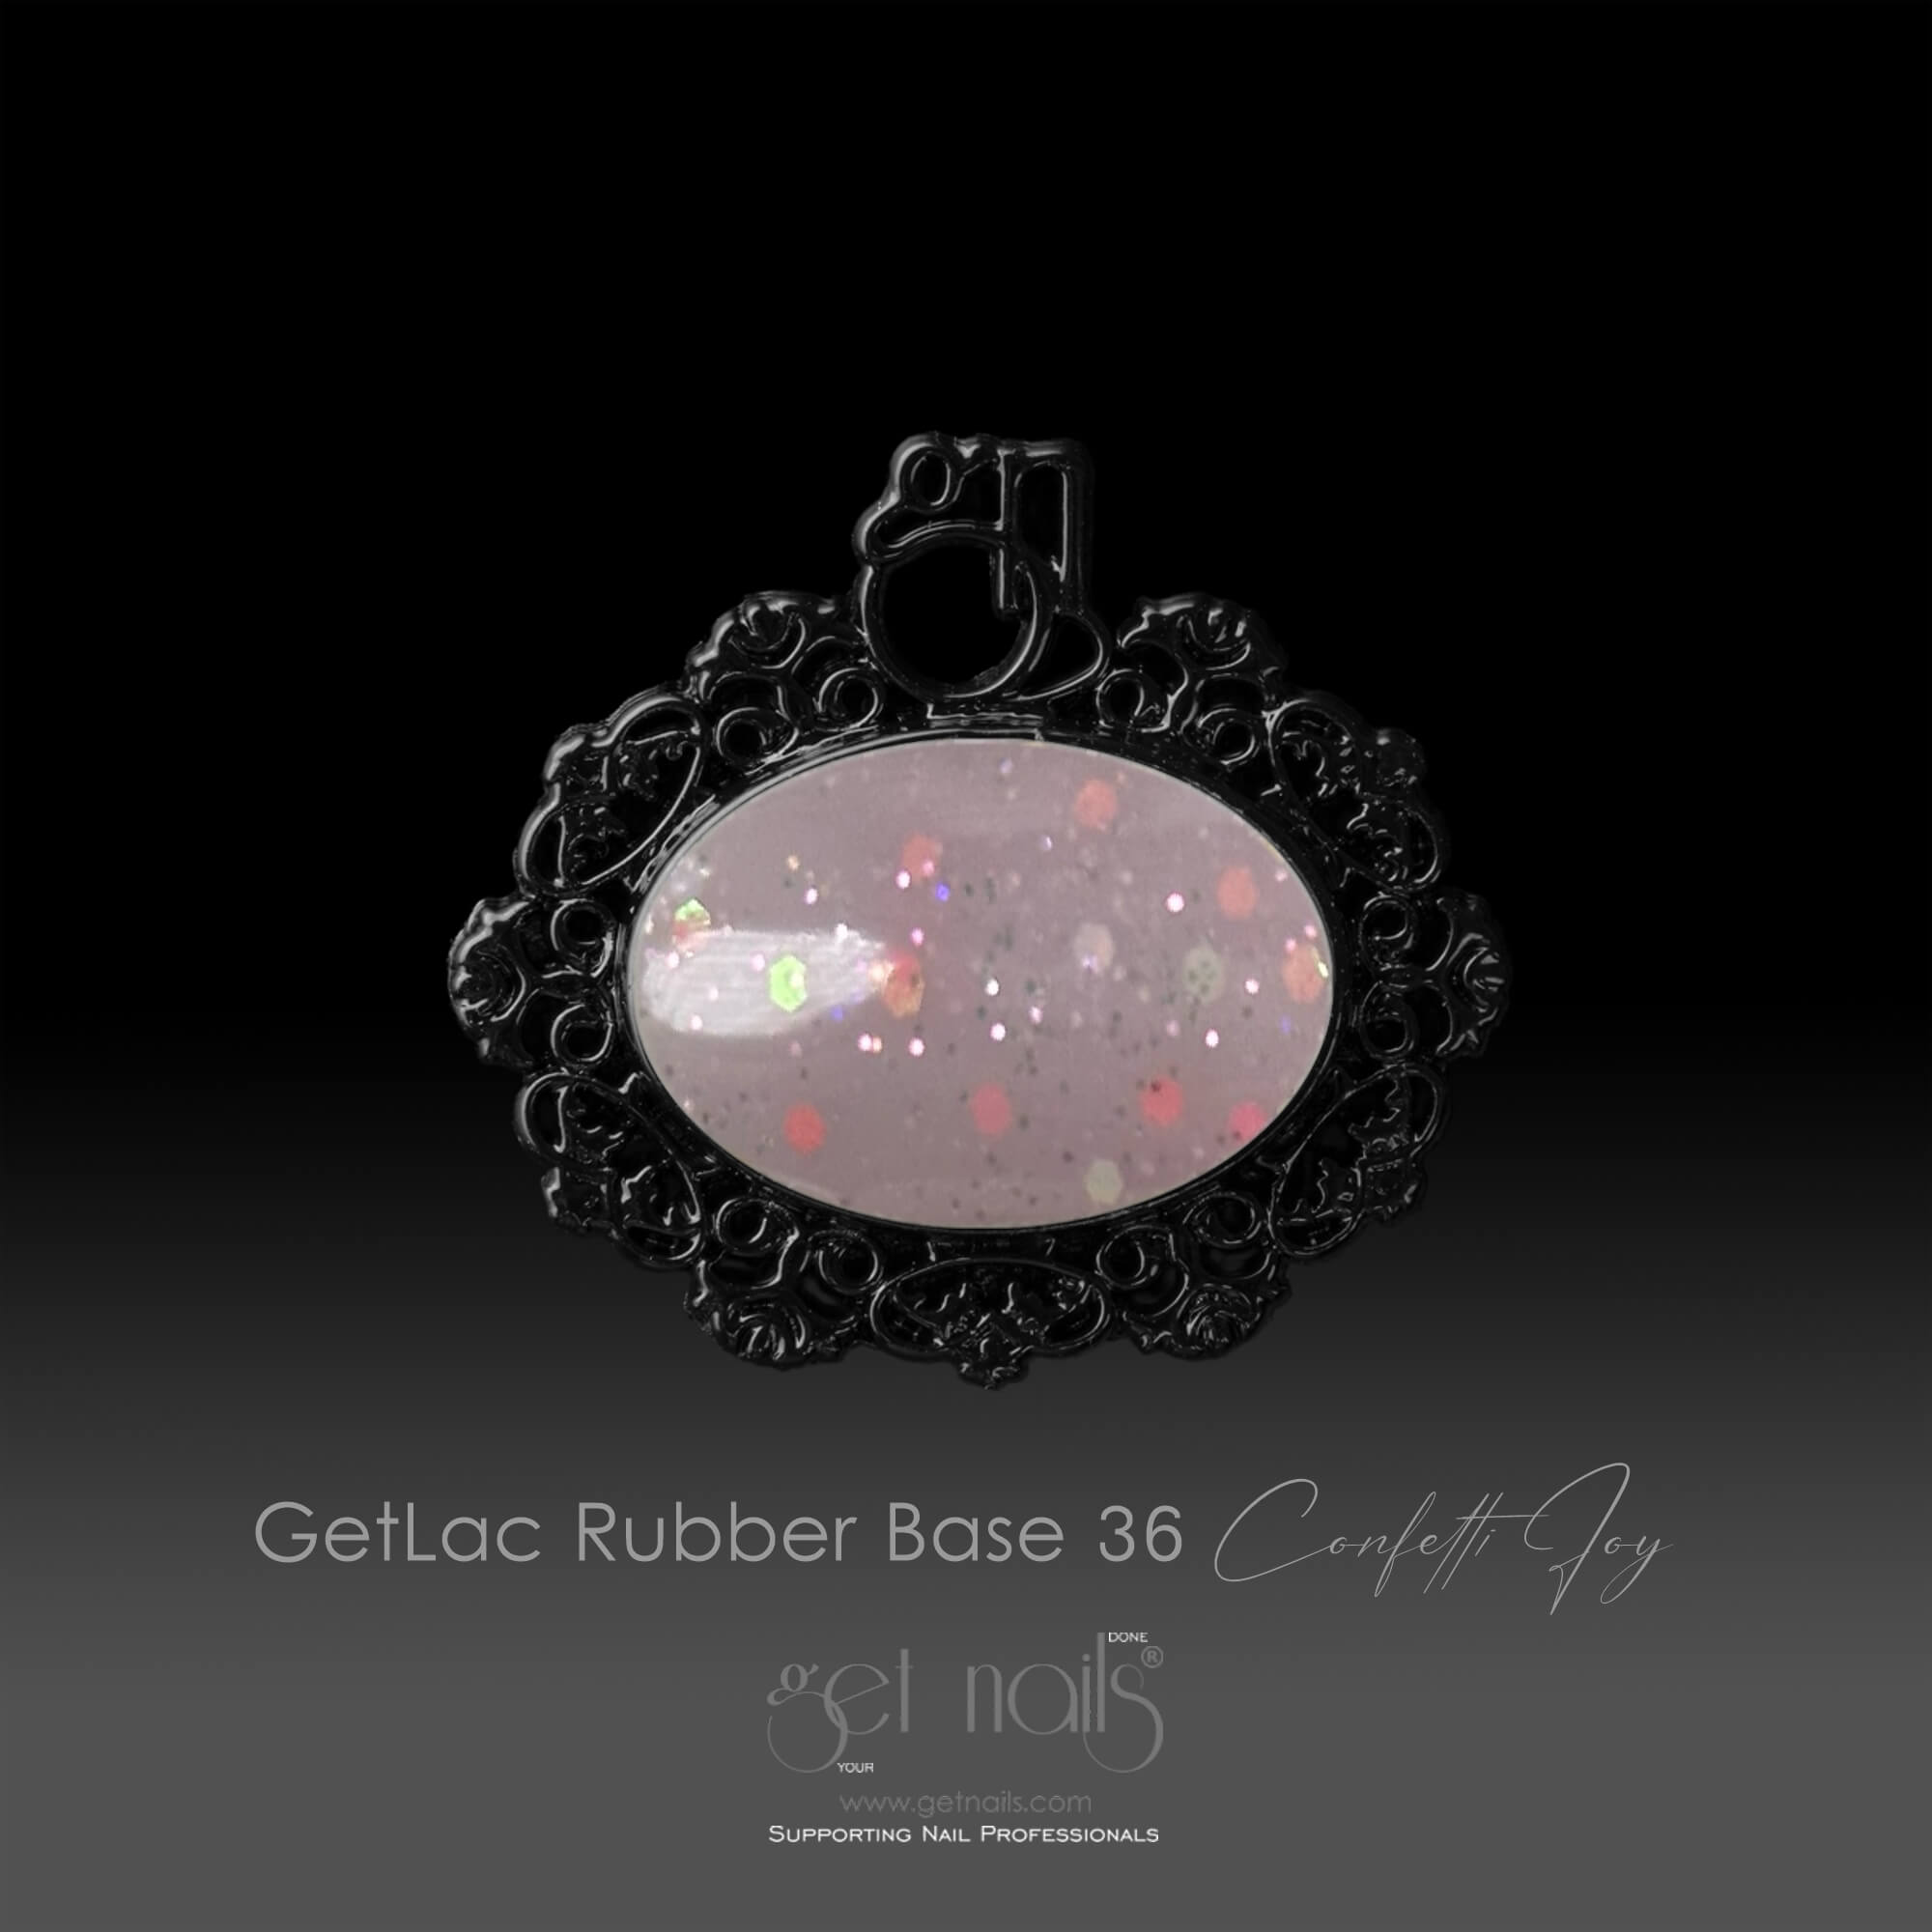 Get Nails Austria - GetLac Rubber Base 36 Confetti Joy 15g